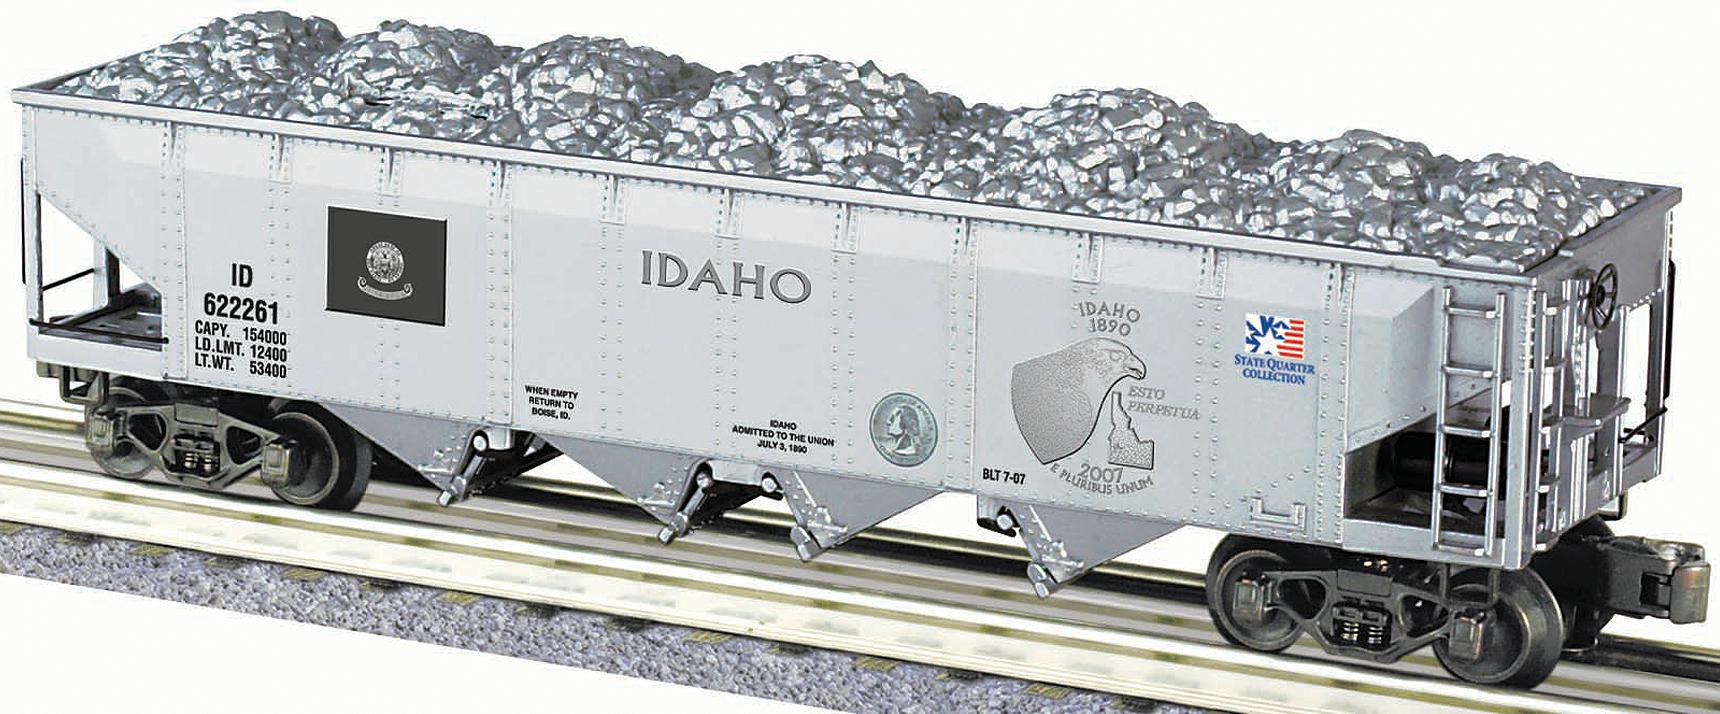 Idaho State Quarter Die Cast 4-Bay Hopper Bank image